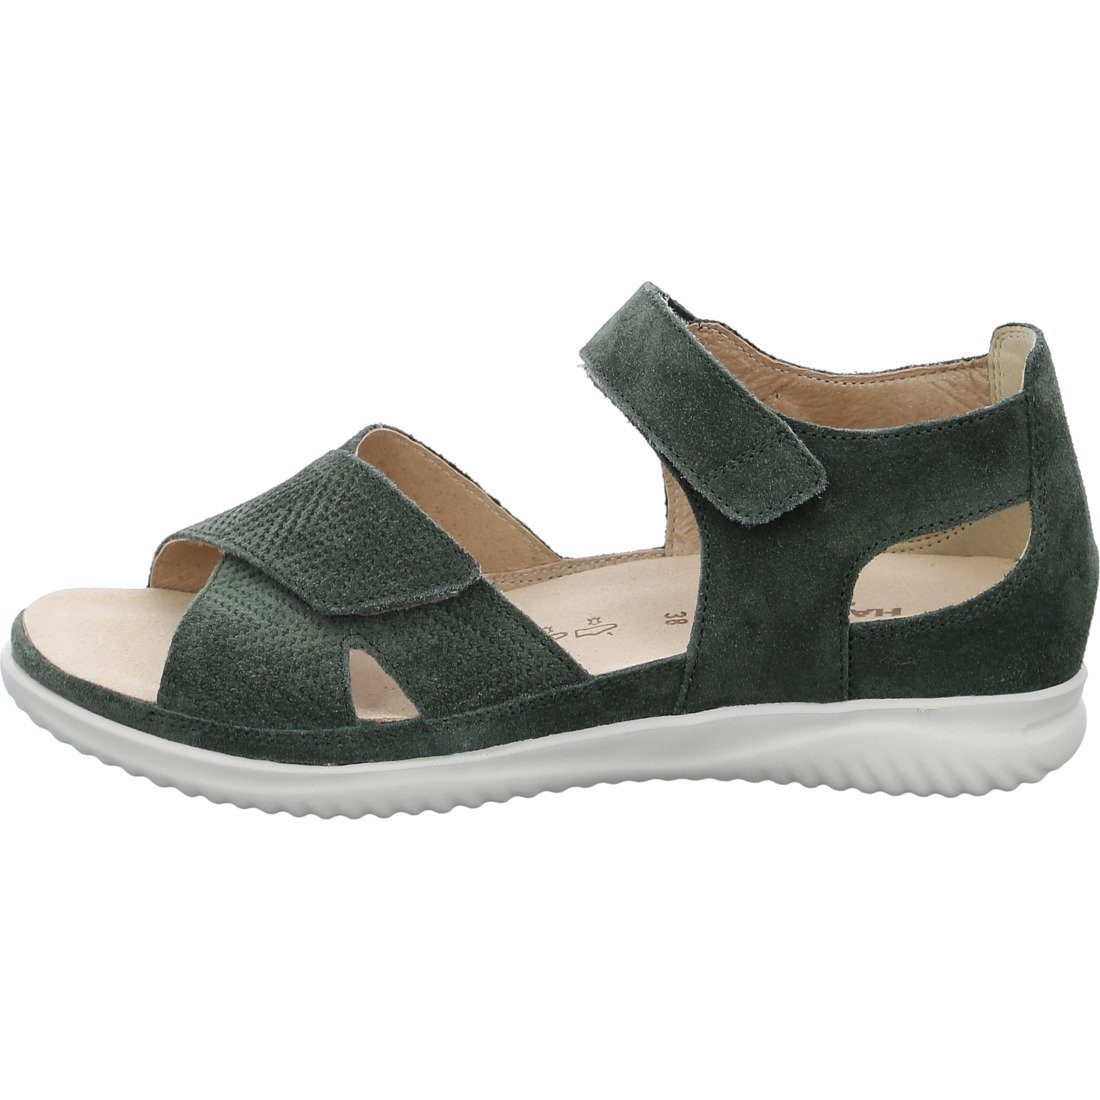 Hartjes Hartjes 048736 Sandalette Velours - Breeze Sandalette Schuhe, grün